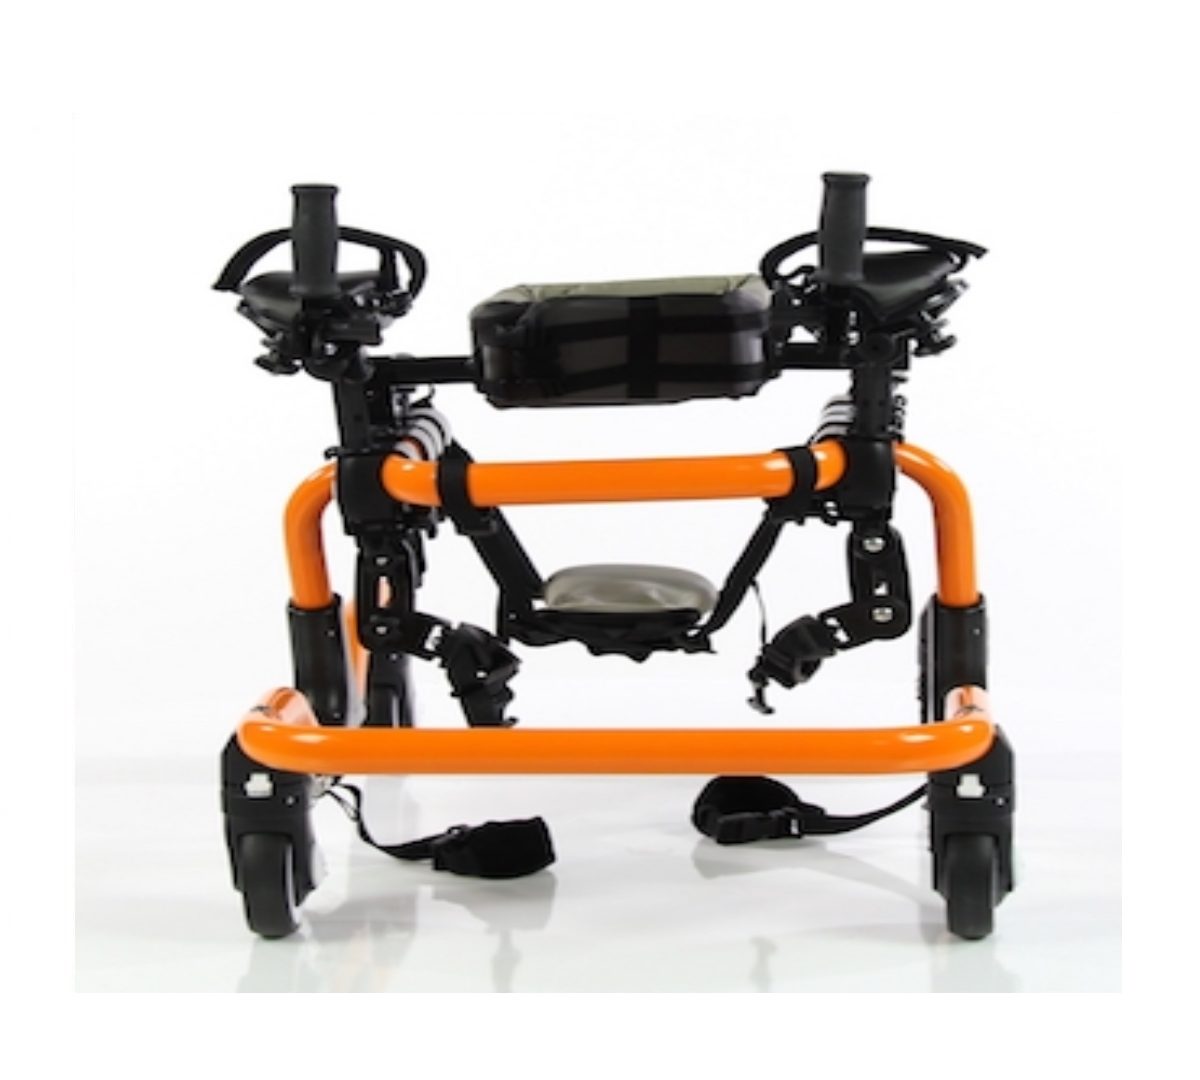 WOLLEX | WG-W943 Pediatrik Walker | Akülü Tekerlekli Sandalye | Tekerlekli Sandalye